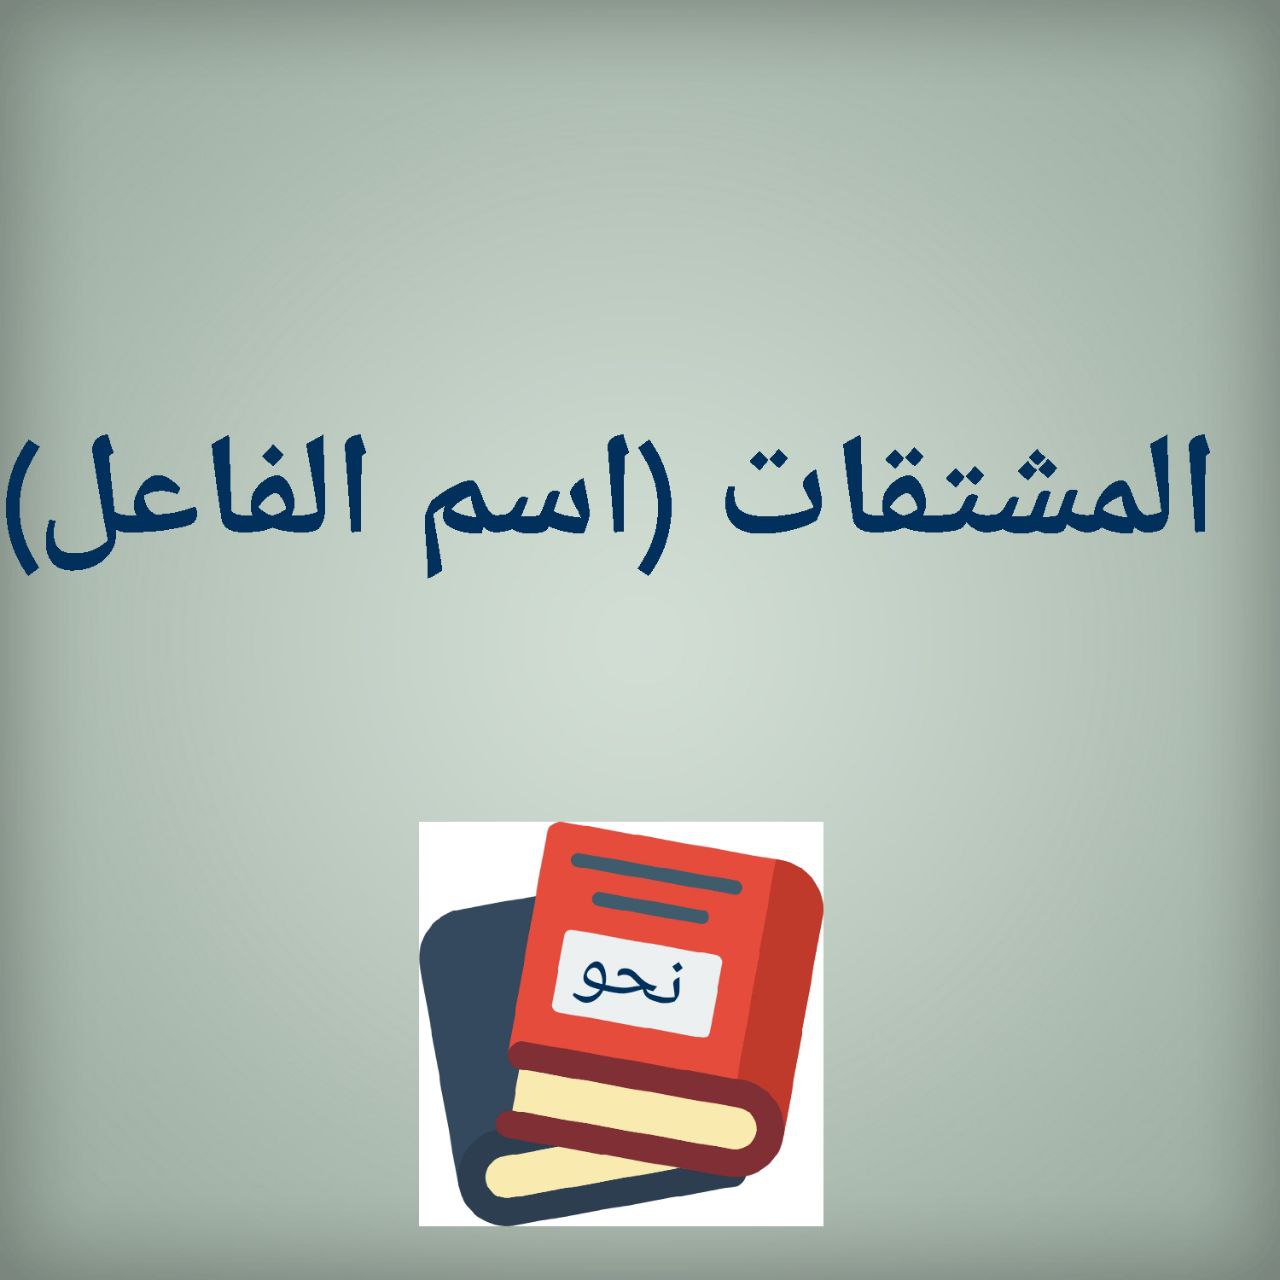 You are currently viewing إعمال اسم الفاعل (تابع المشتقات)